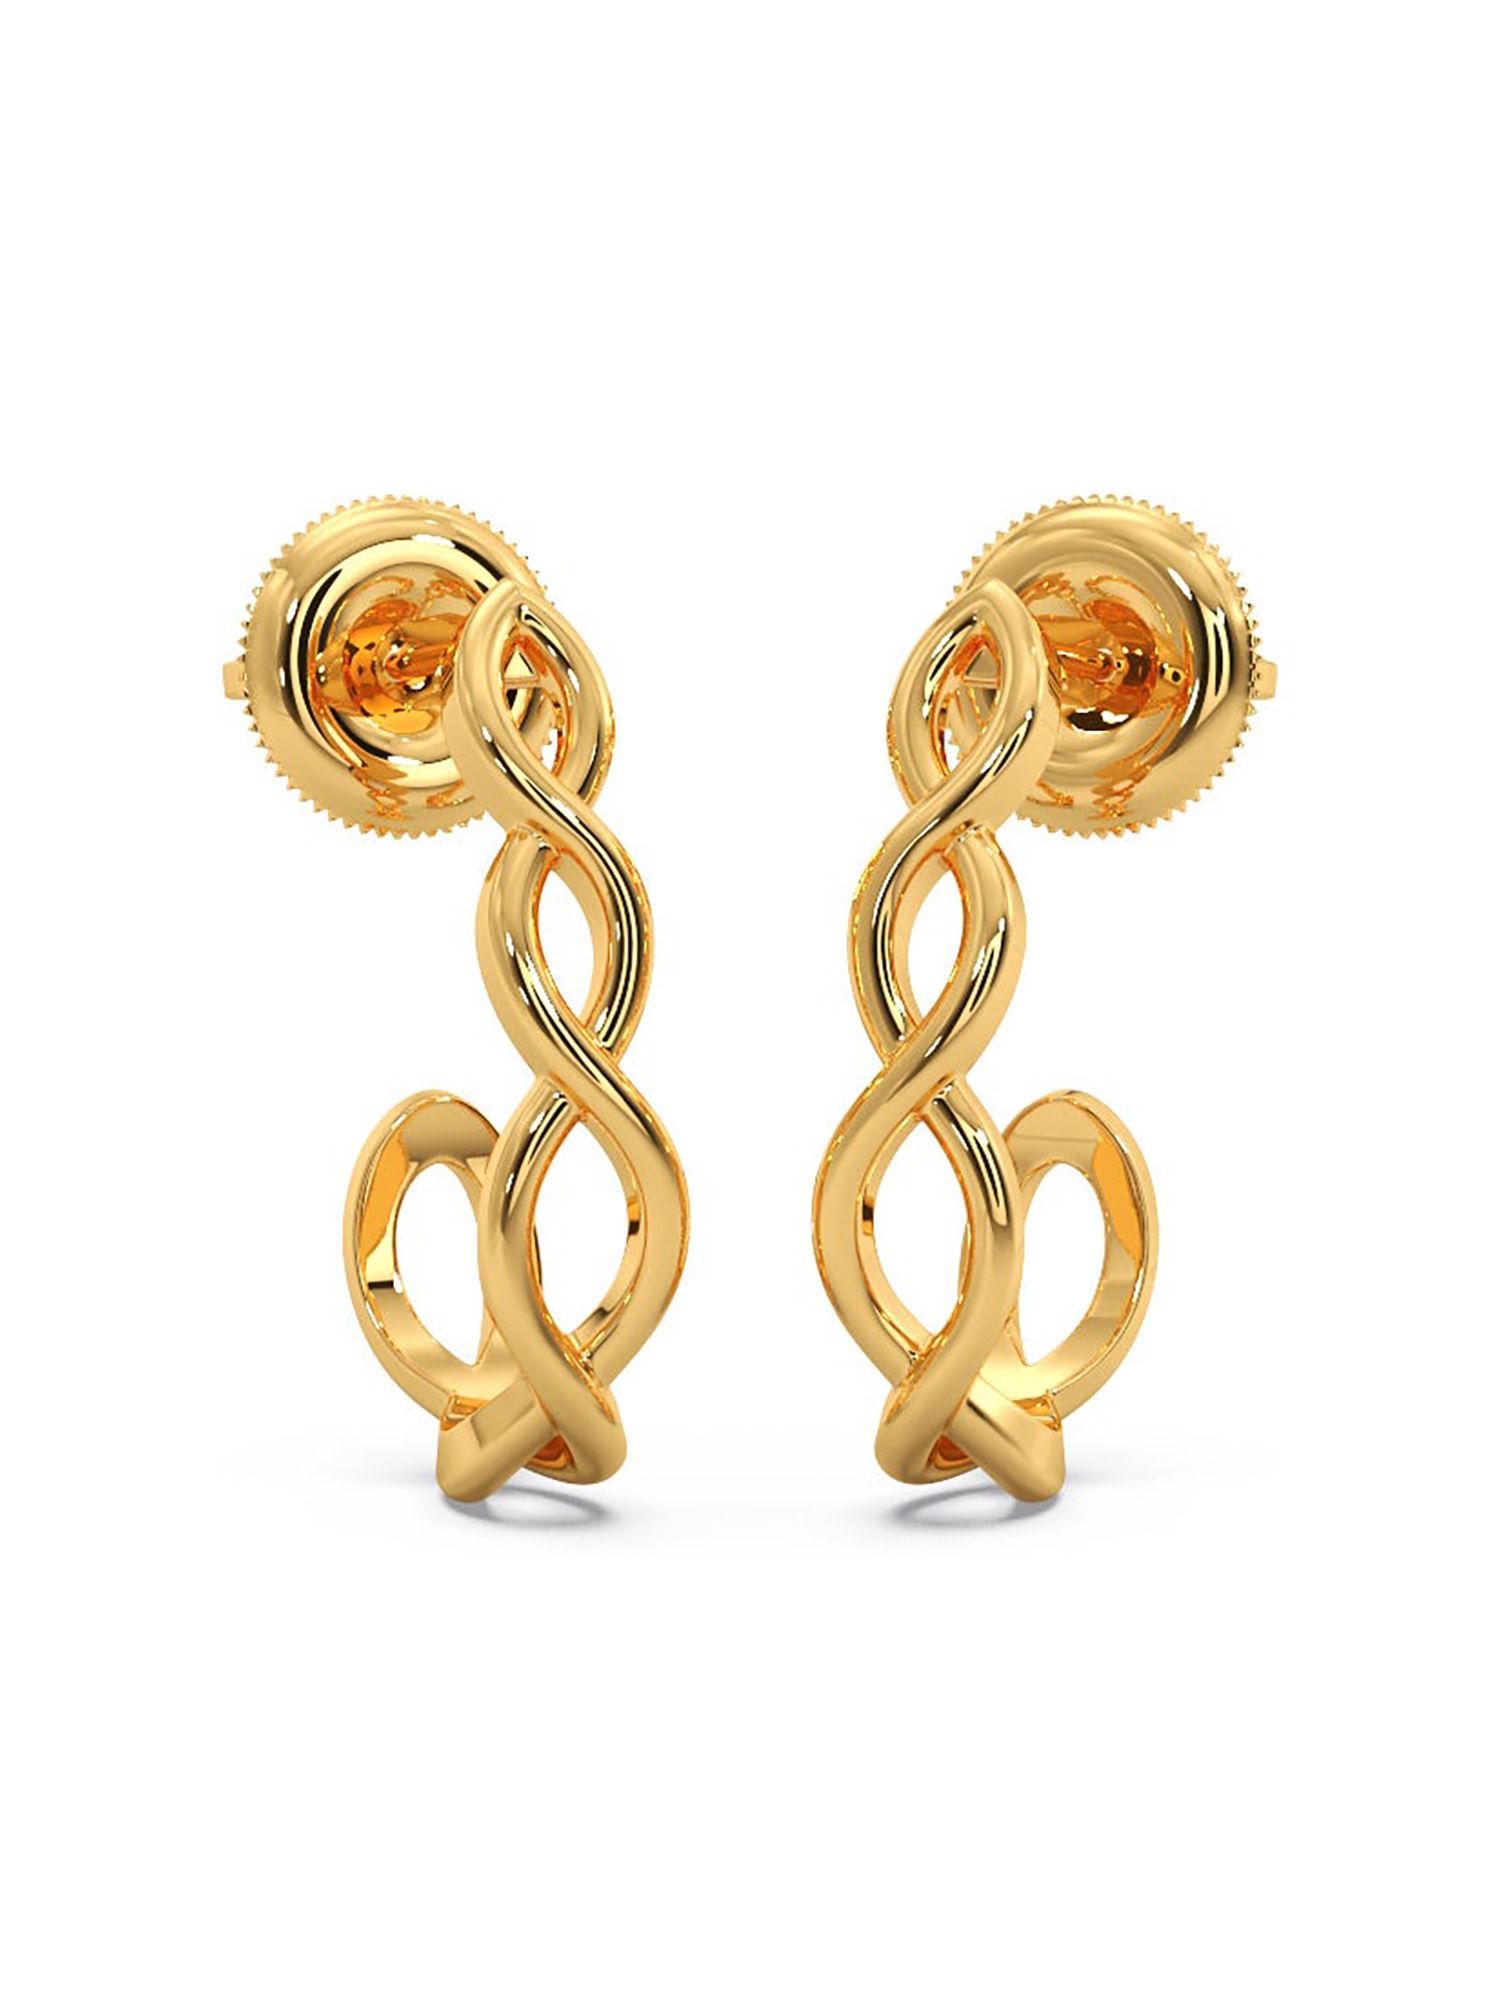 18k (750) bis hallmark yellow gold earring for women